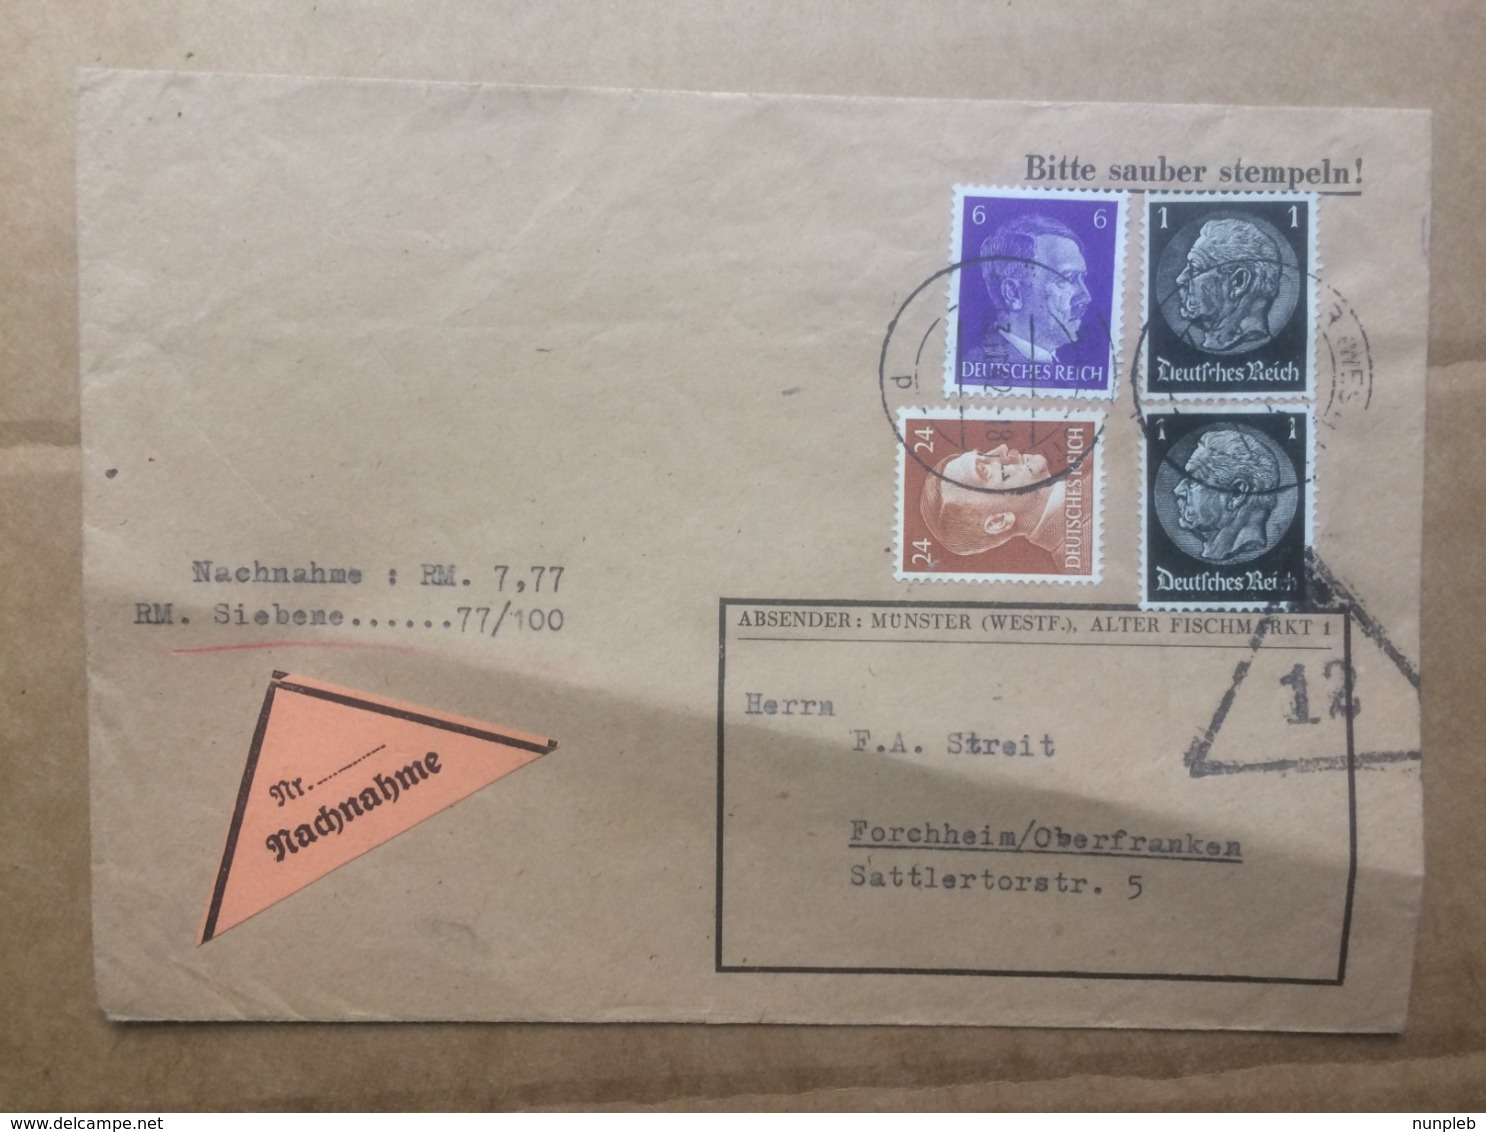 GERMANY 1942 Cover Nachnahme Check Mark 12 In Triangle Sent To Forchheim - Briefe U. Dokumente